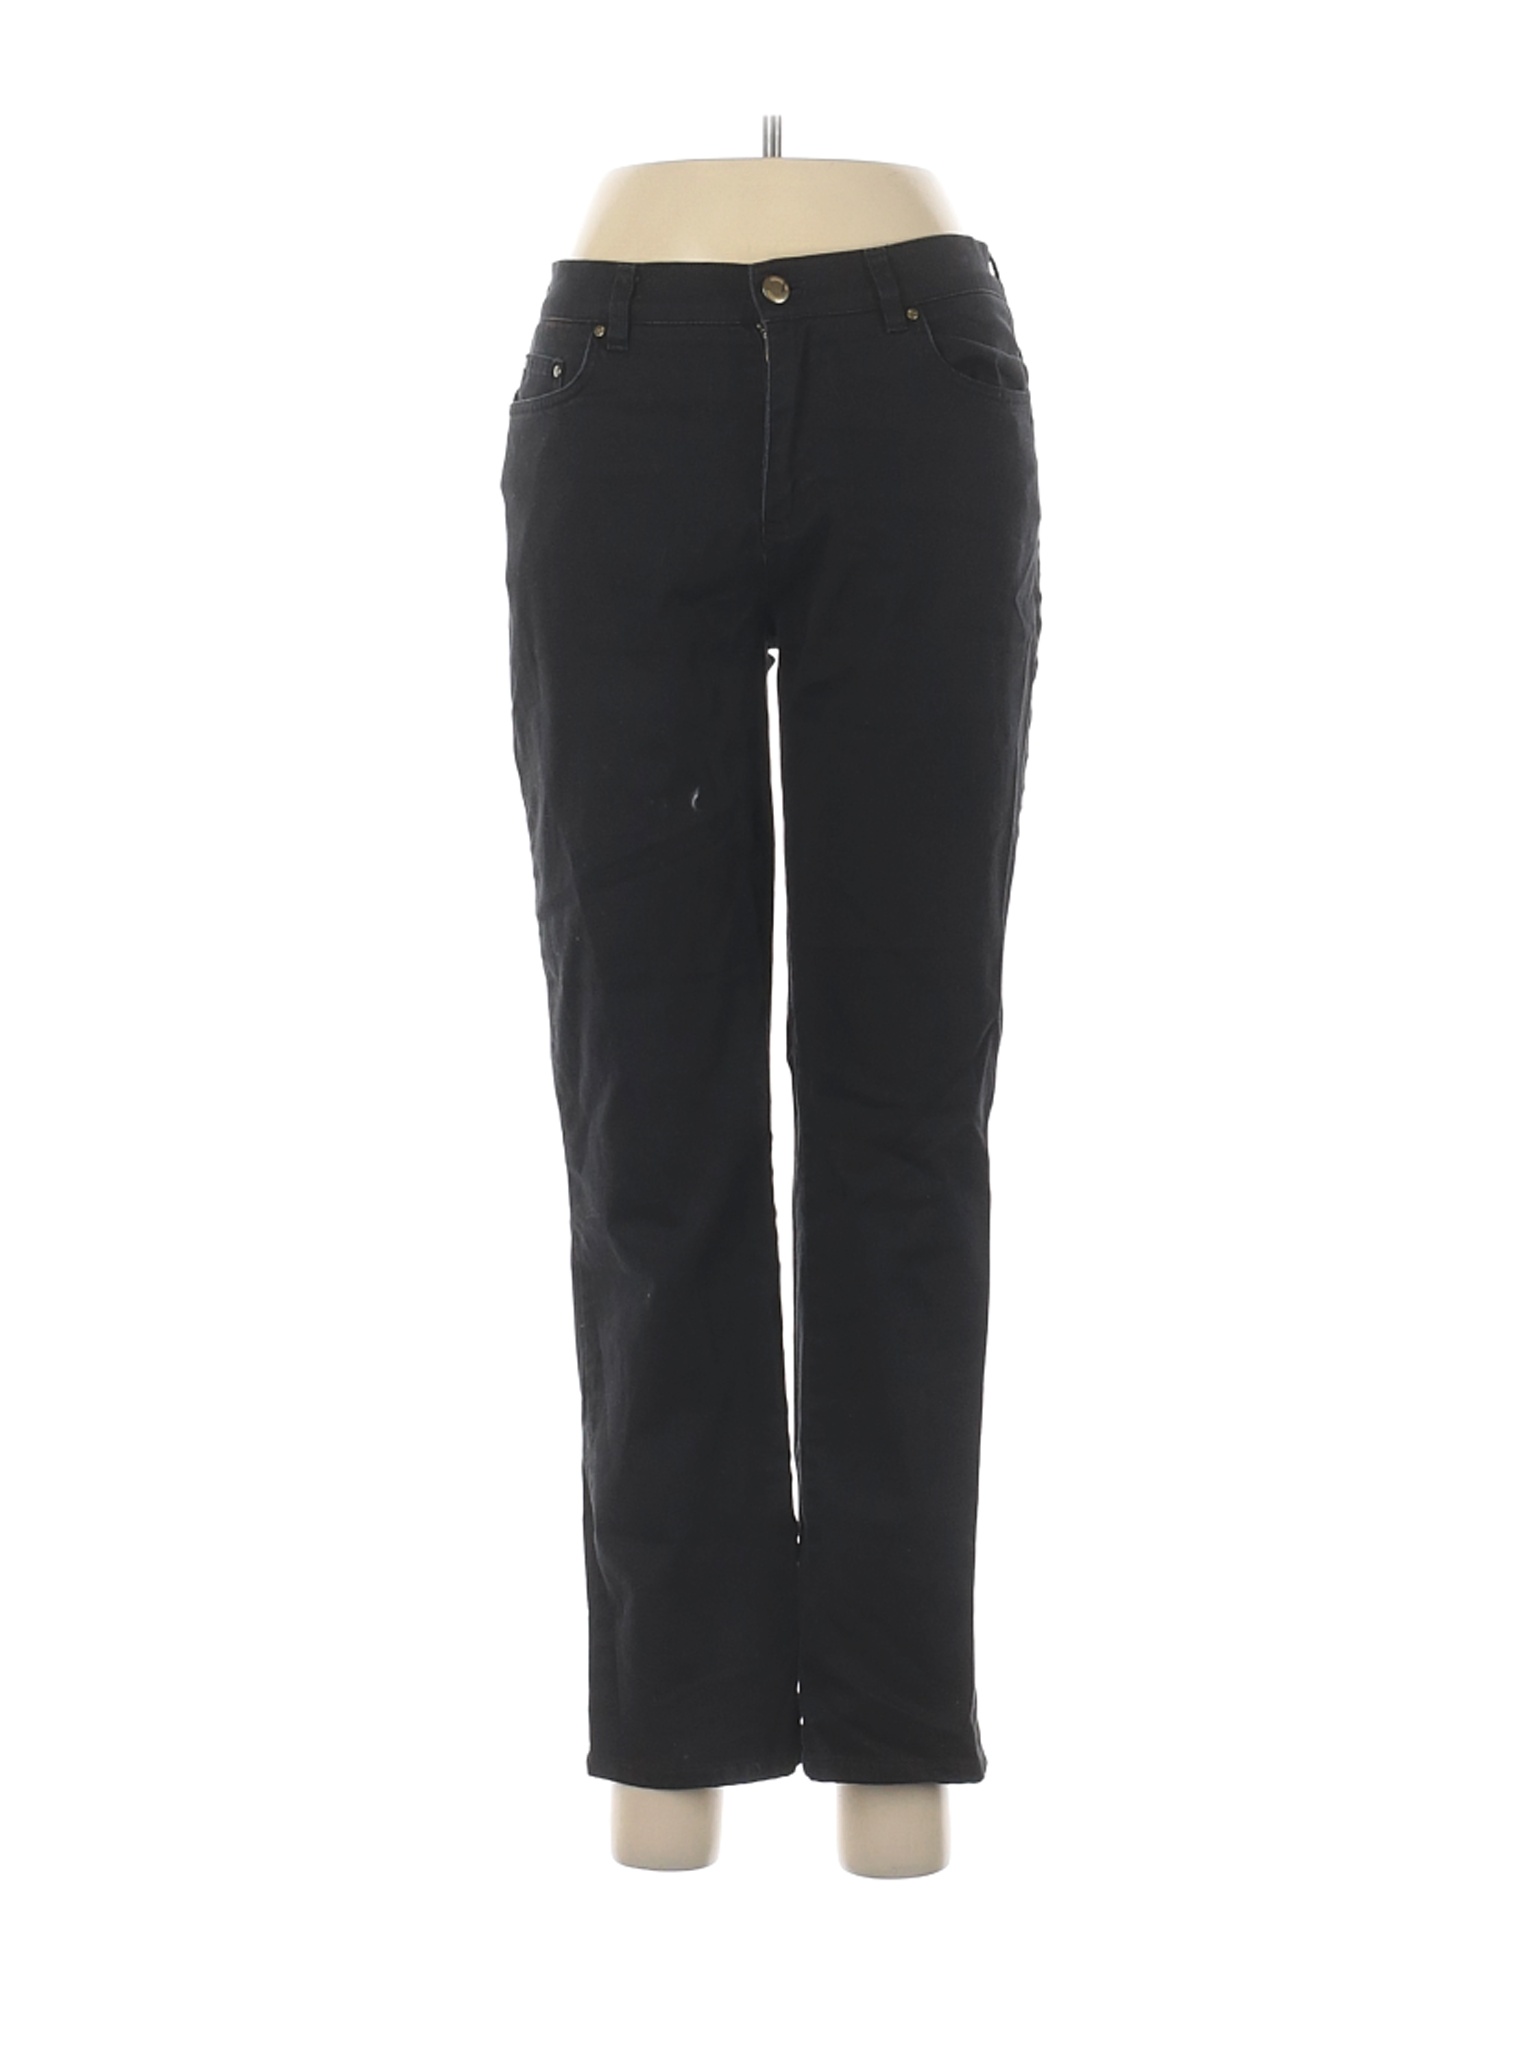 Jones New York Women Black Jeans 6 Petites | eBay